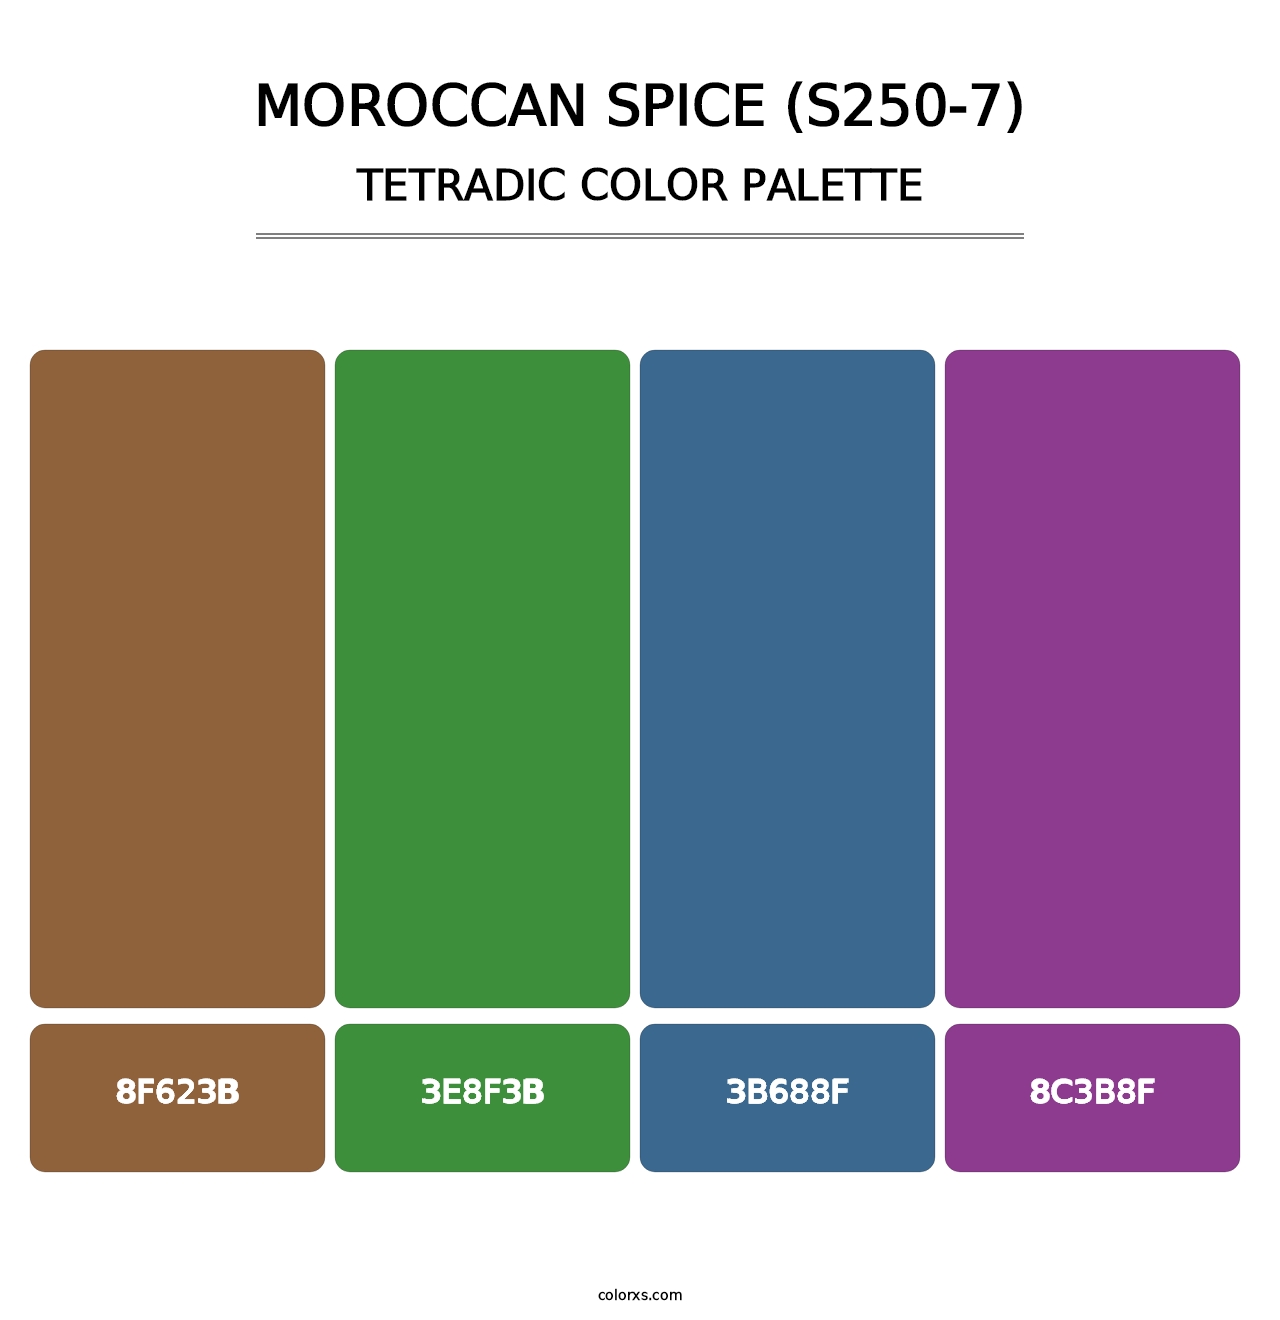 Moroccan Spice (S250-7) - Tetradic Color Palette